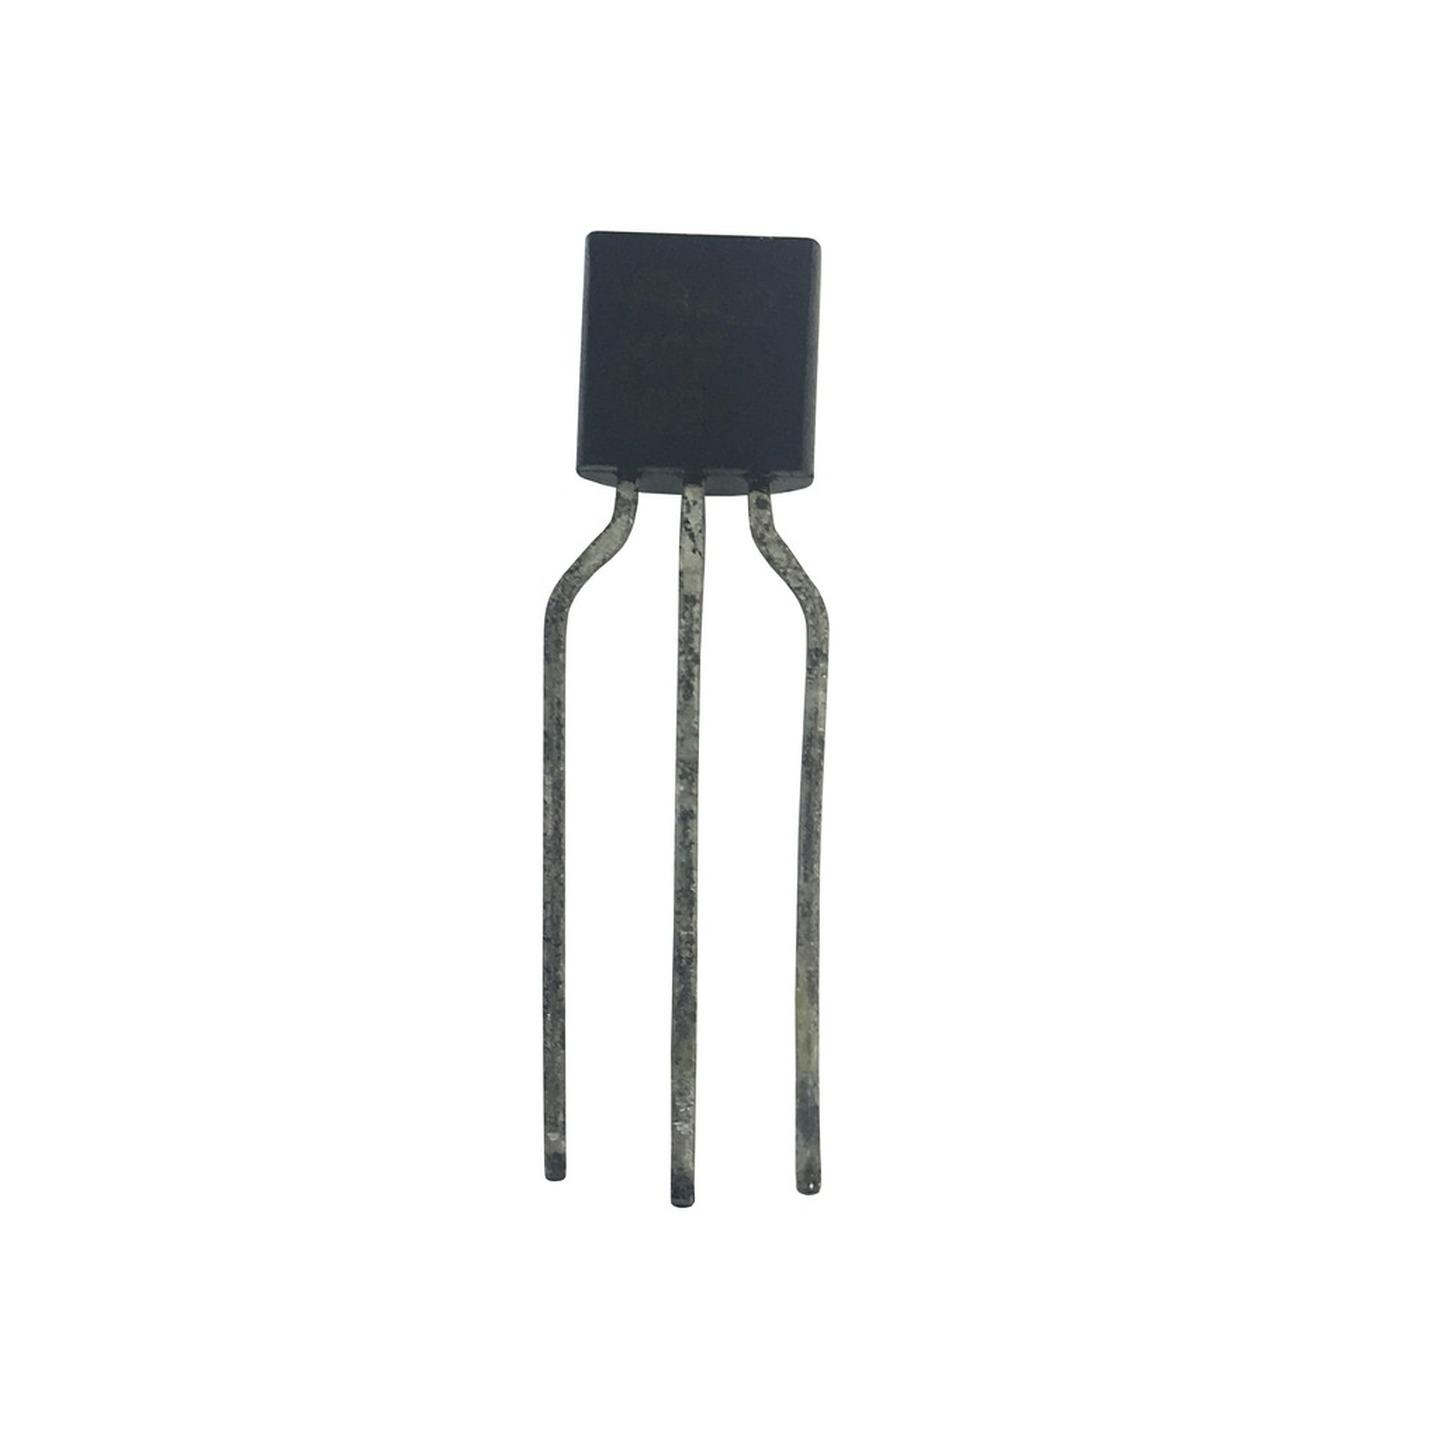 BC338 NPN Transistor